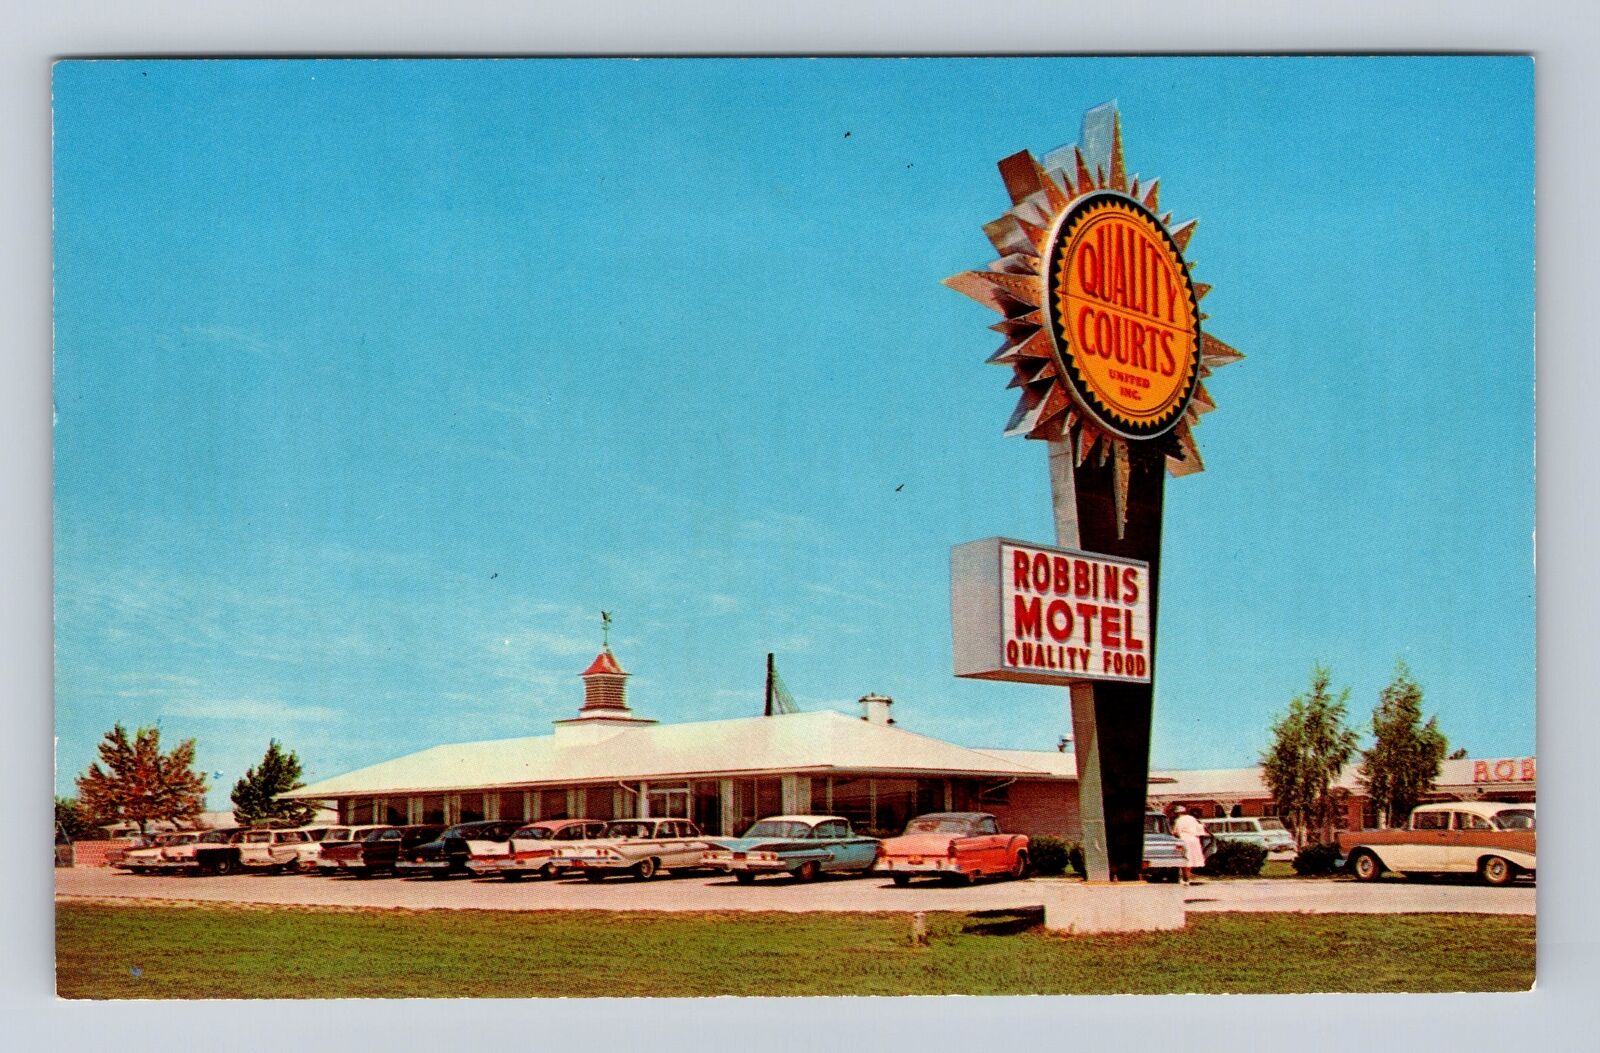 Vandalia IL-Illinois, Quality Courts Motel, Robbins Restaurant, Vintage Postcard